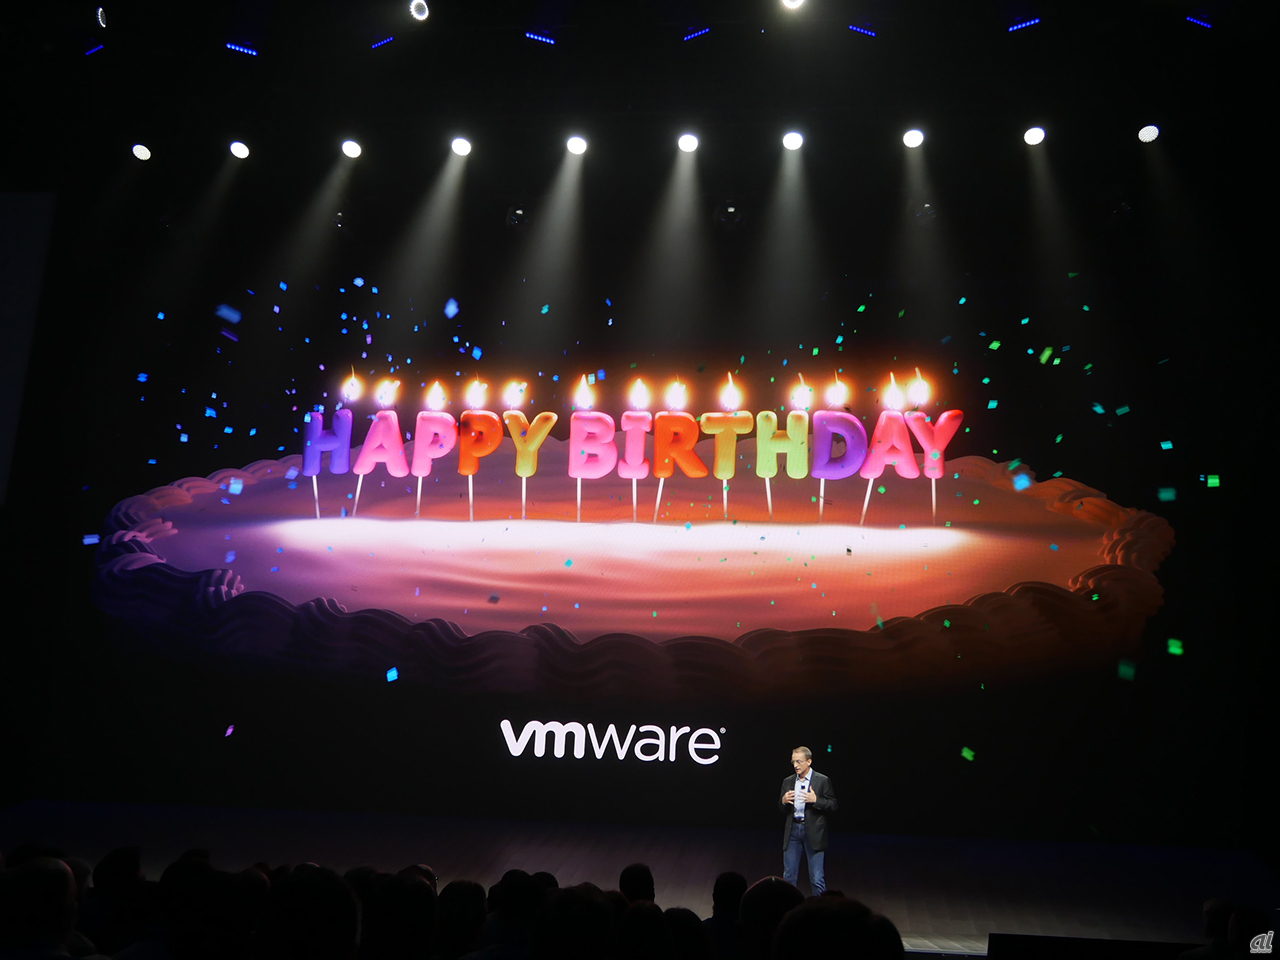 VMwareは設立20周年を迎えた